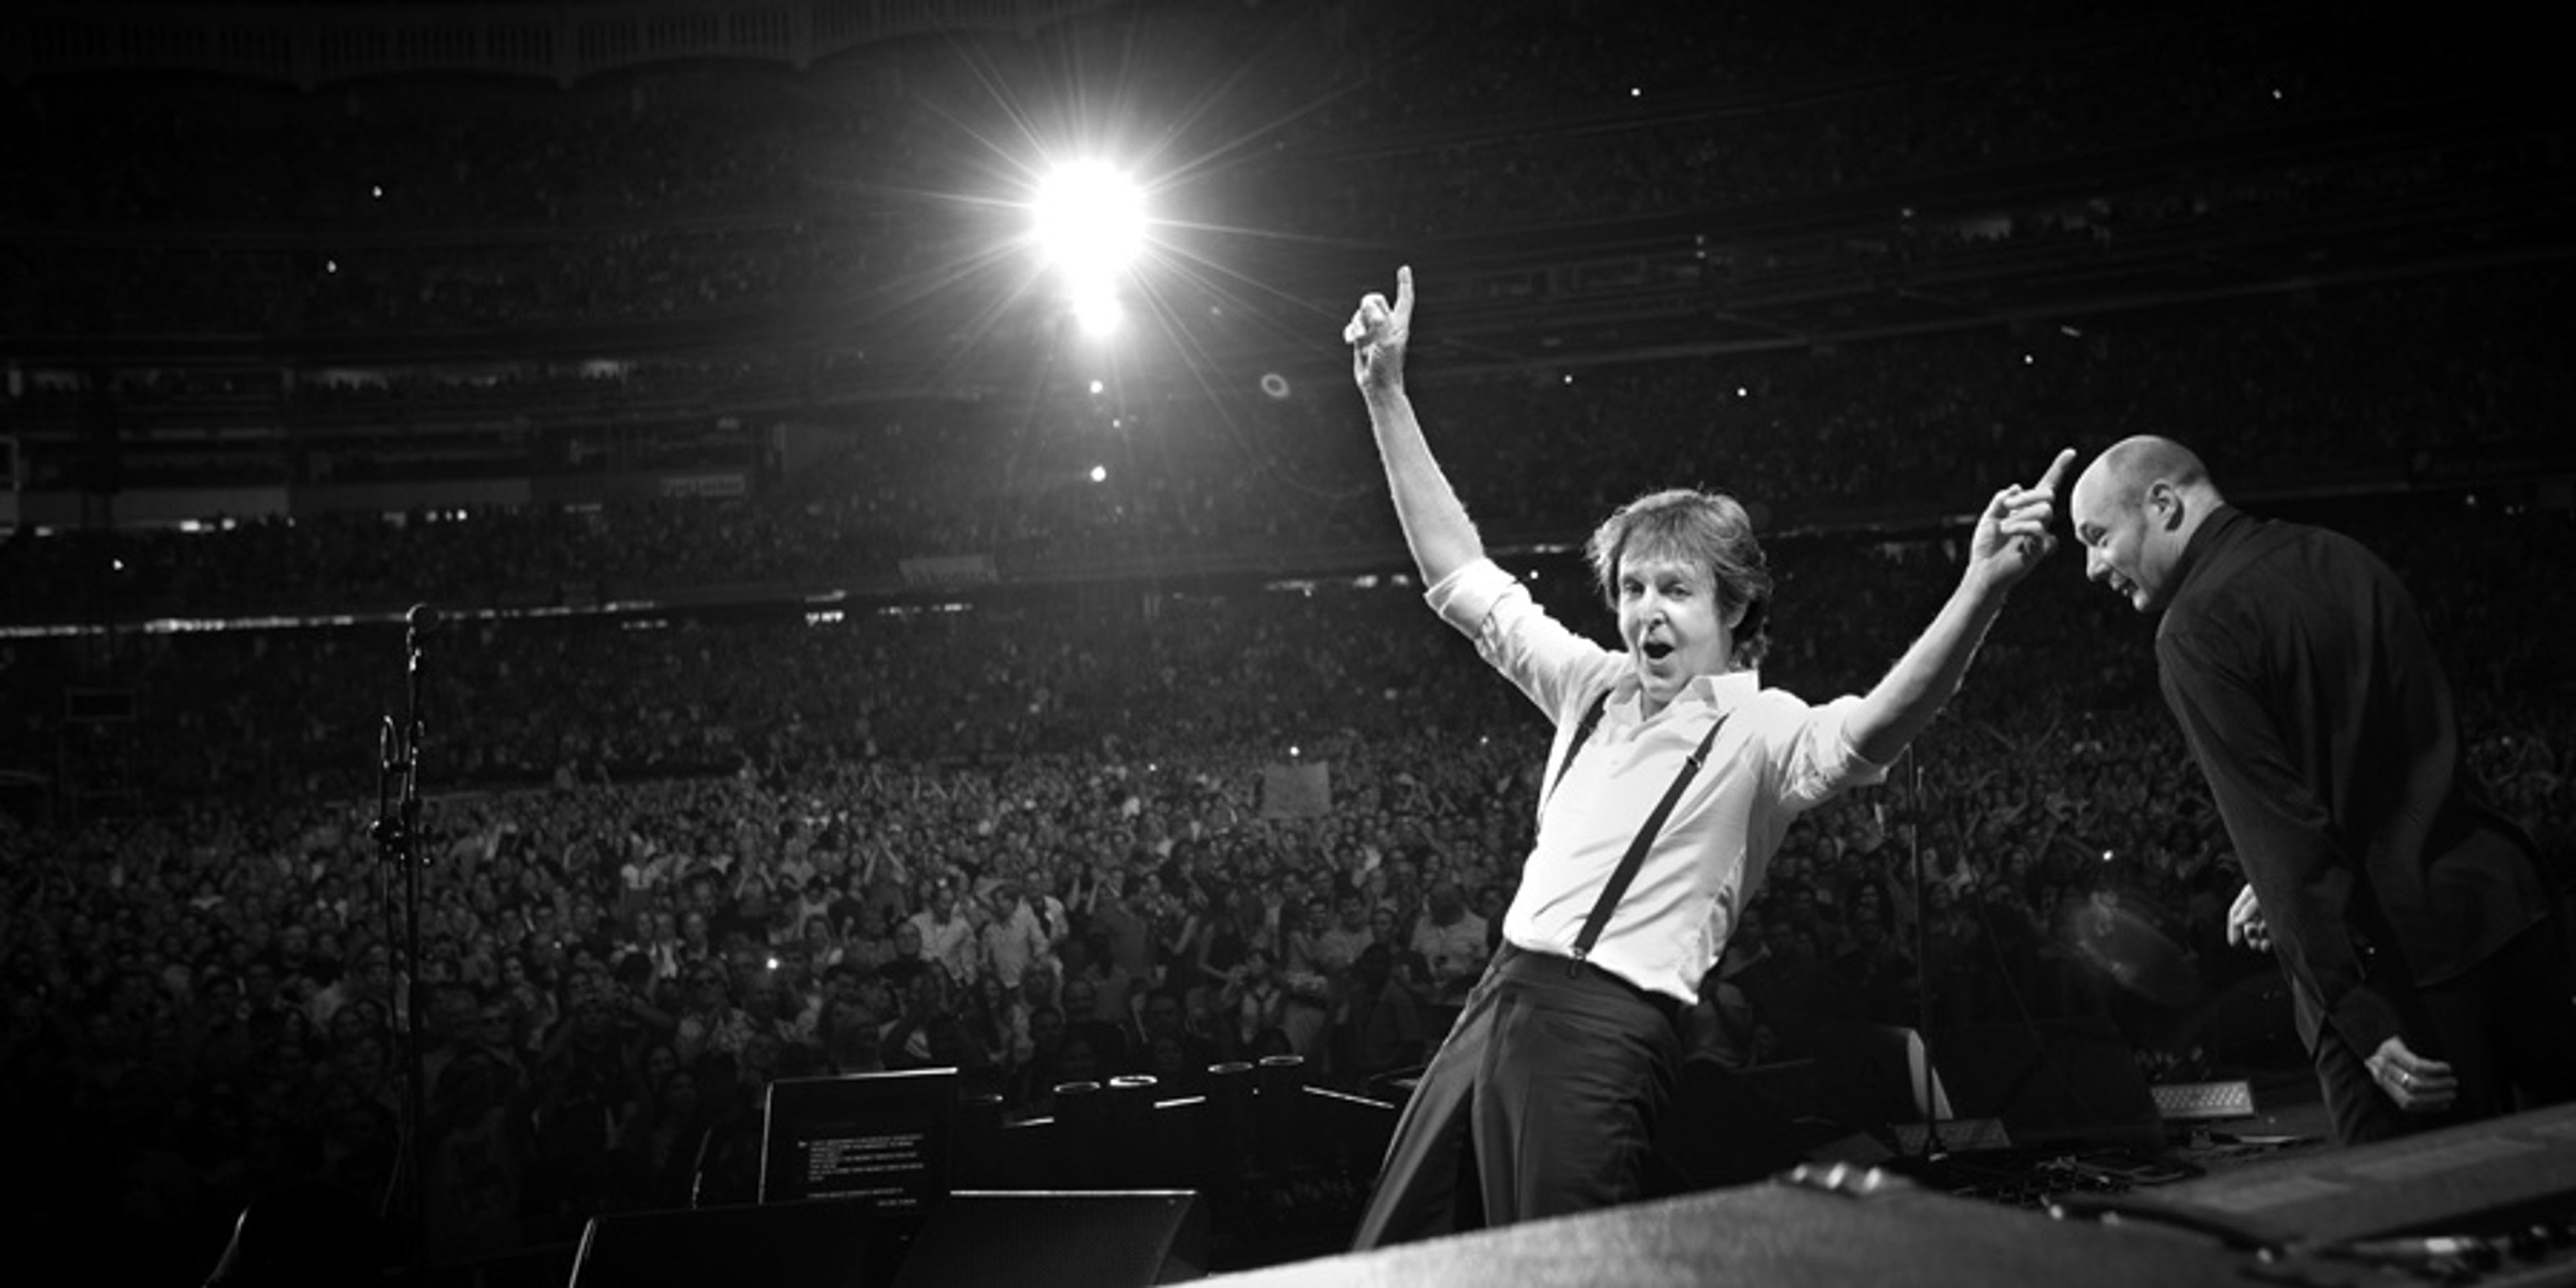 Paul kicks off his 'On The Run' tour at Yankee Stadium, NYC, 15-Jul-11